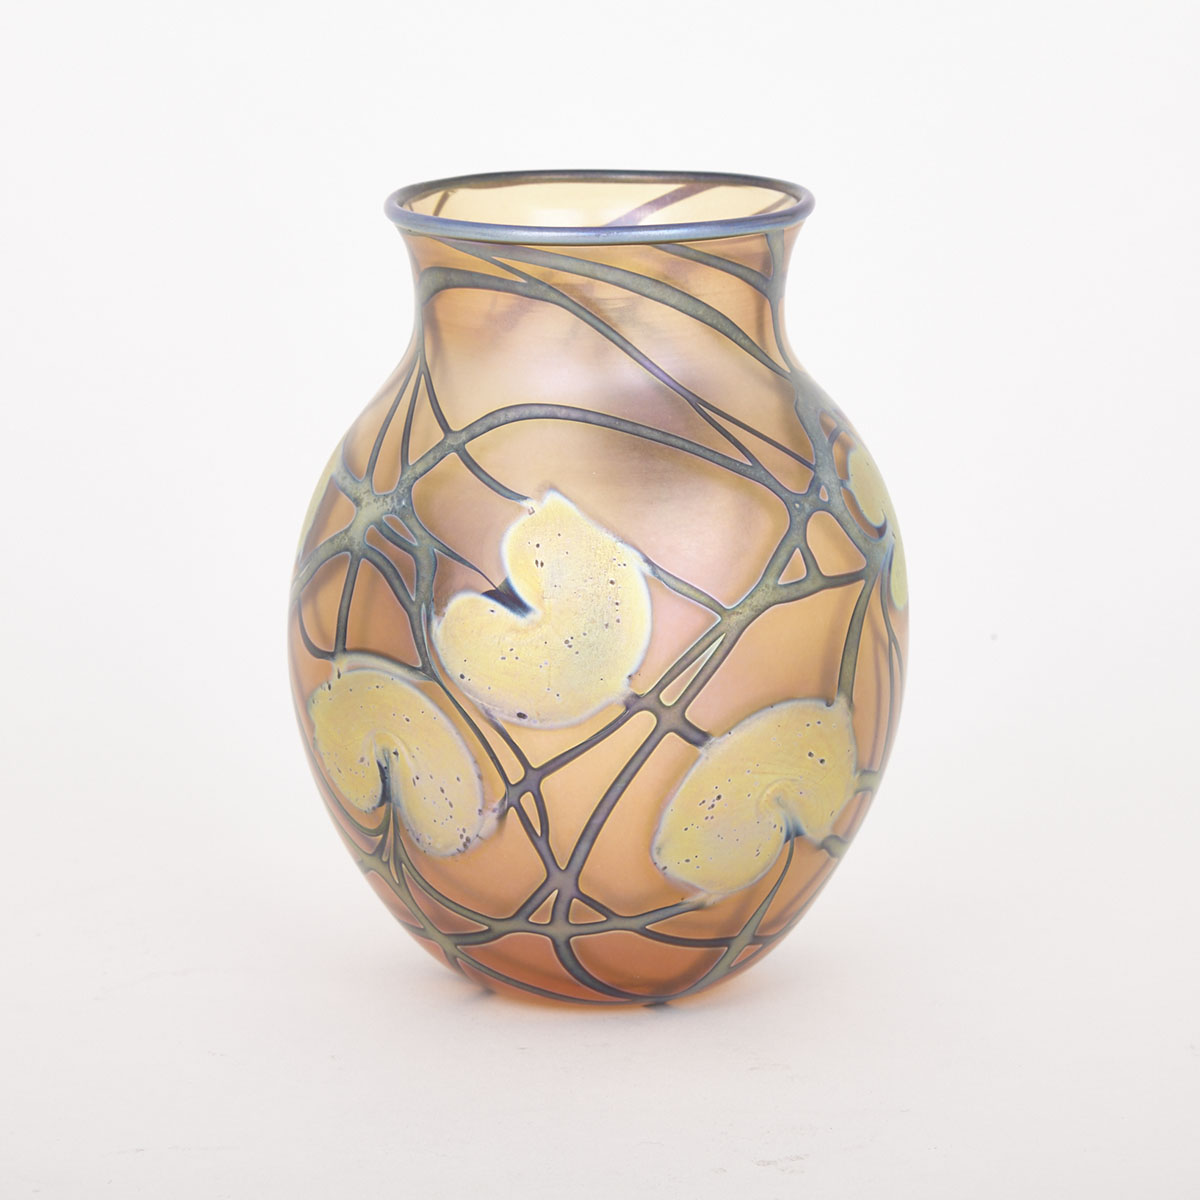 Charles Lotton (American, b.1935), Decorated Iridescent Glass Vase, 1985